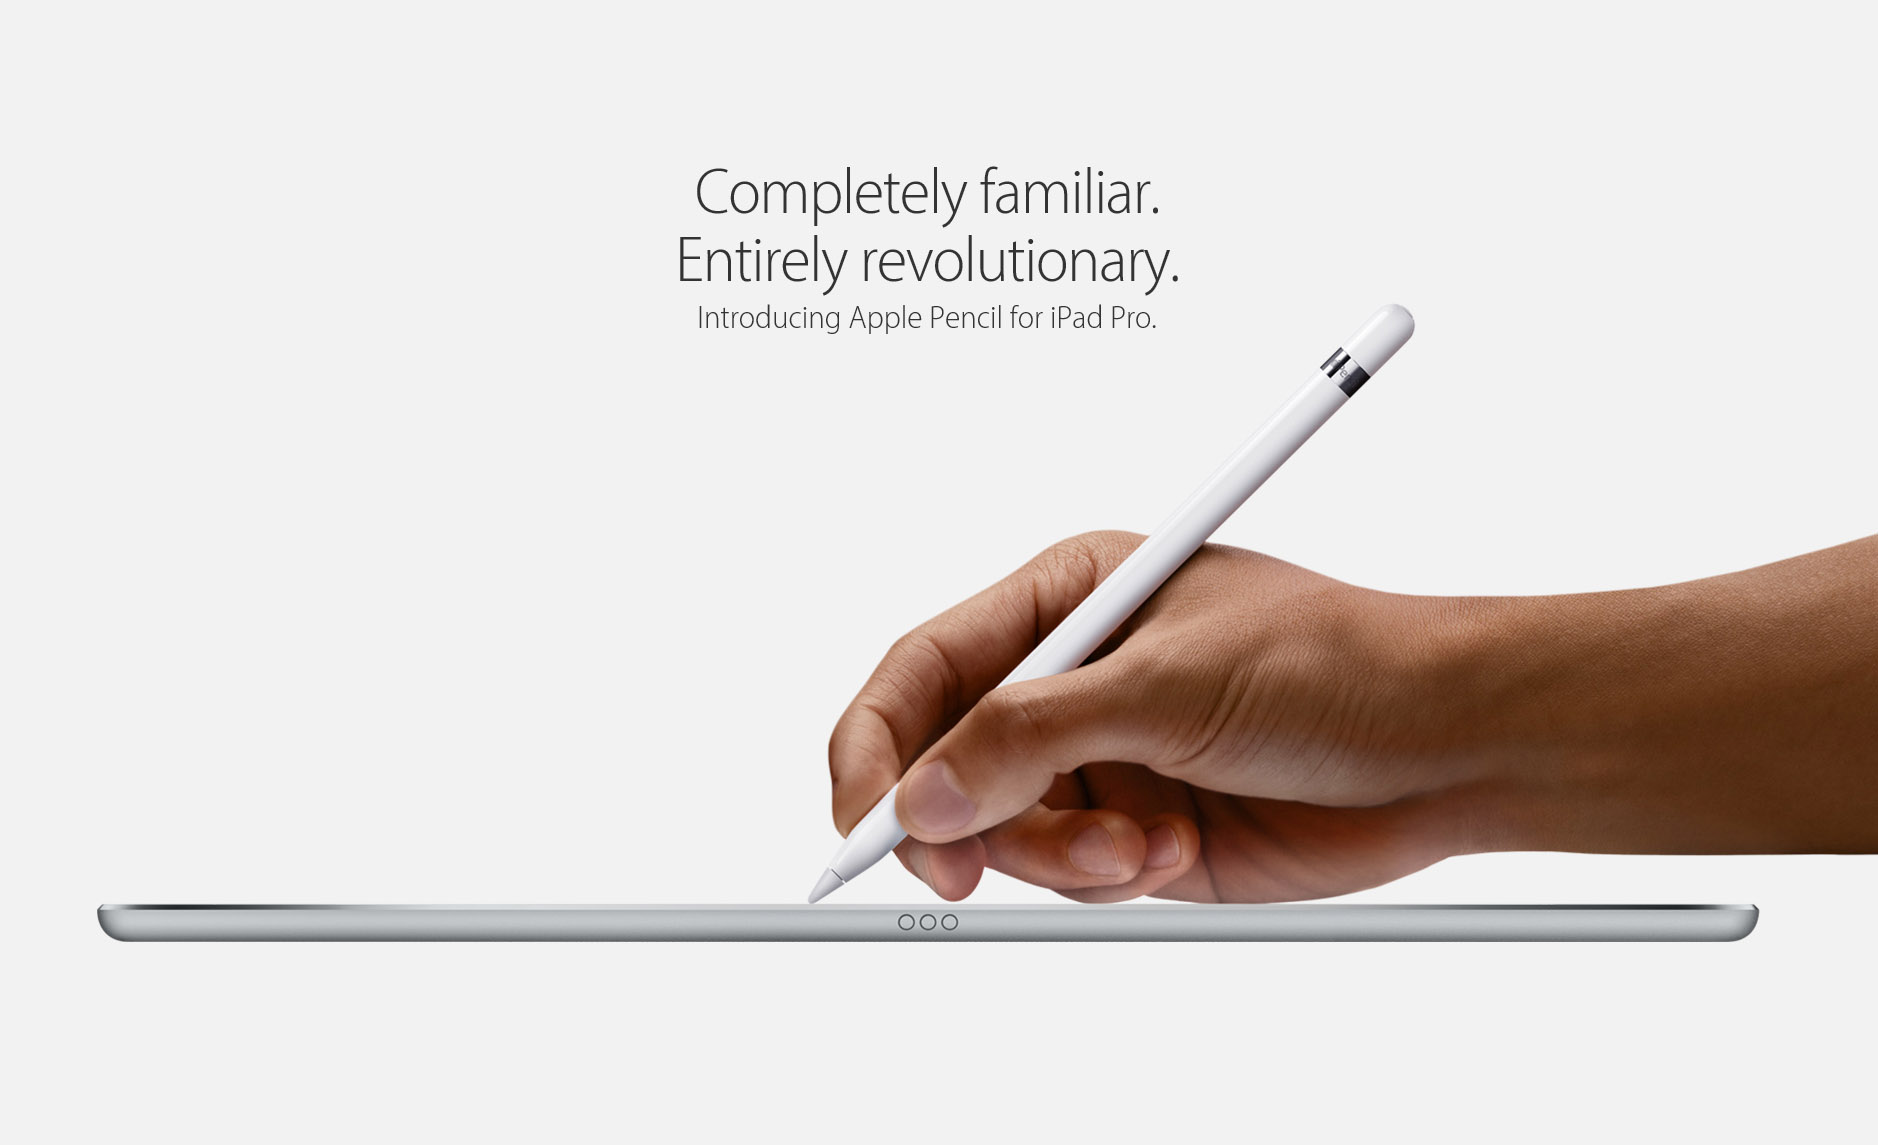 Apple Pencil for iPad Pro advert